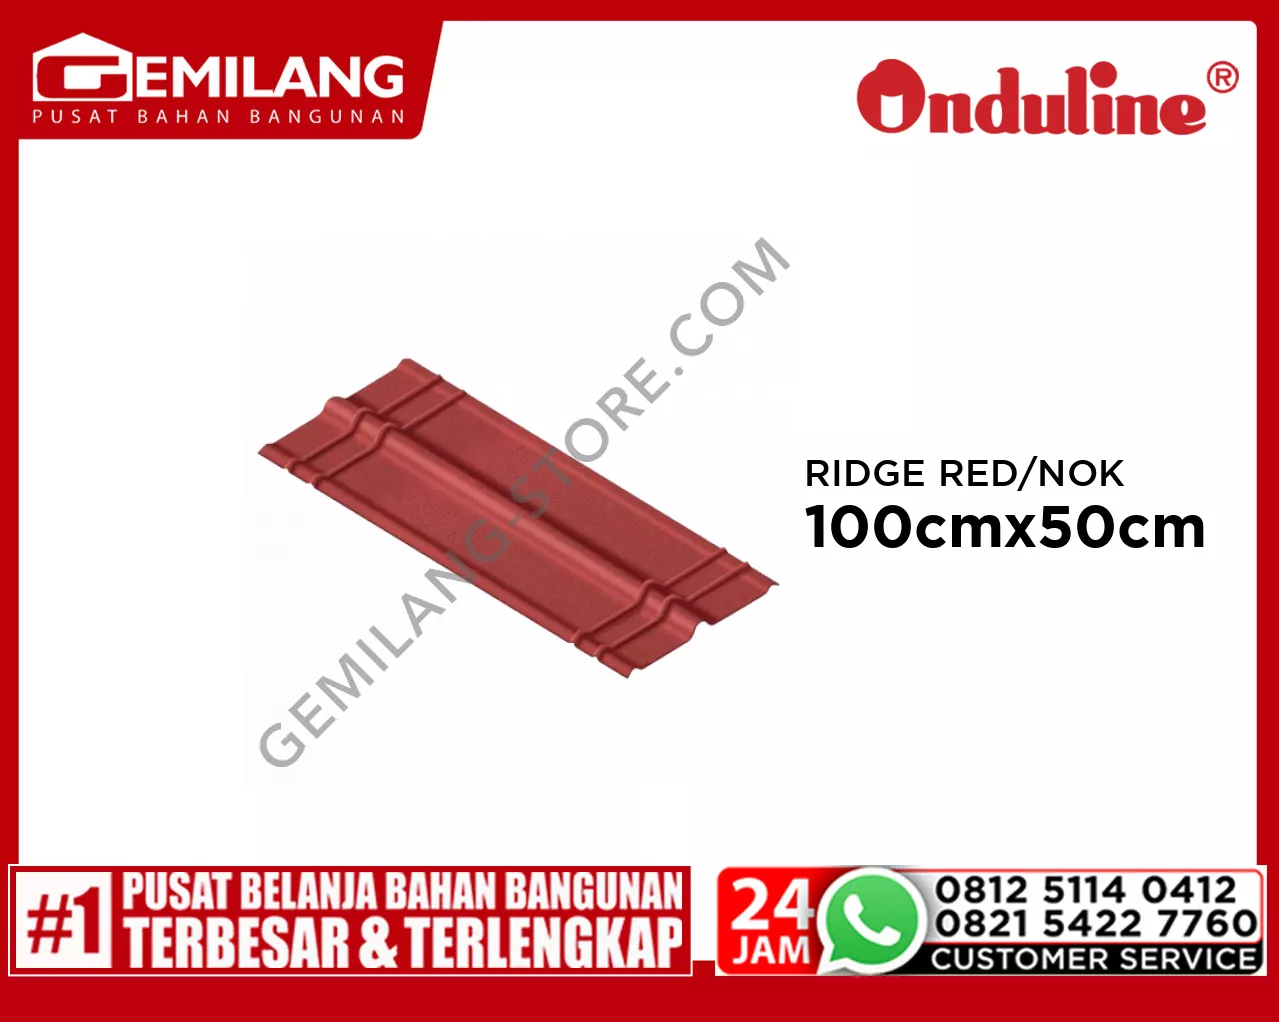 ONDULINE RIDGE RED/NOK 100cmx50cm